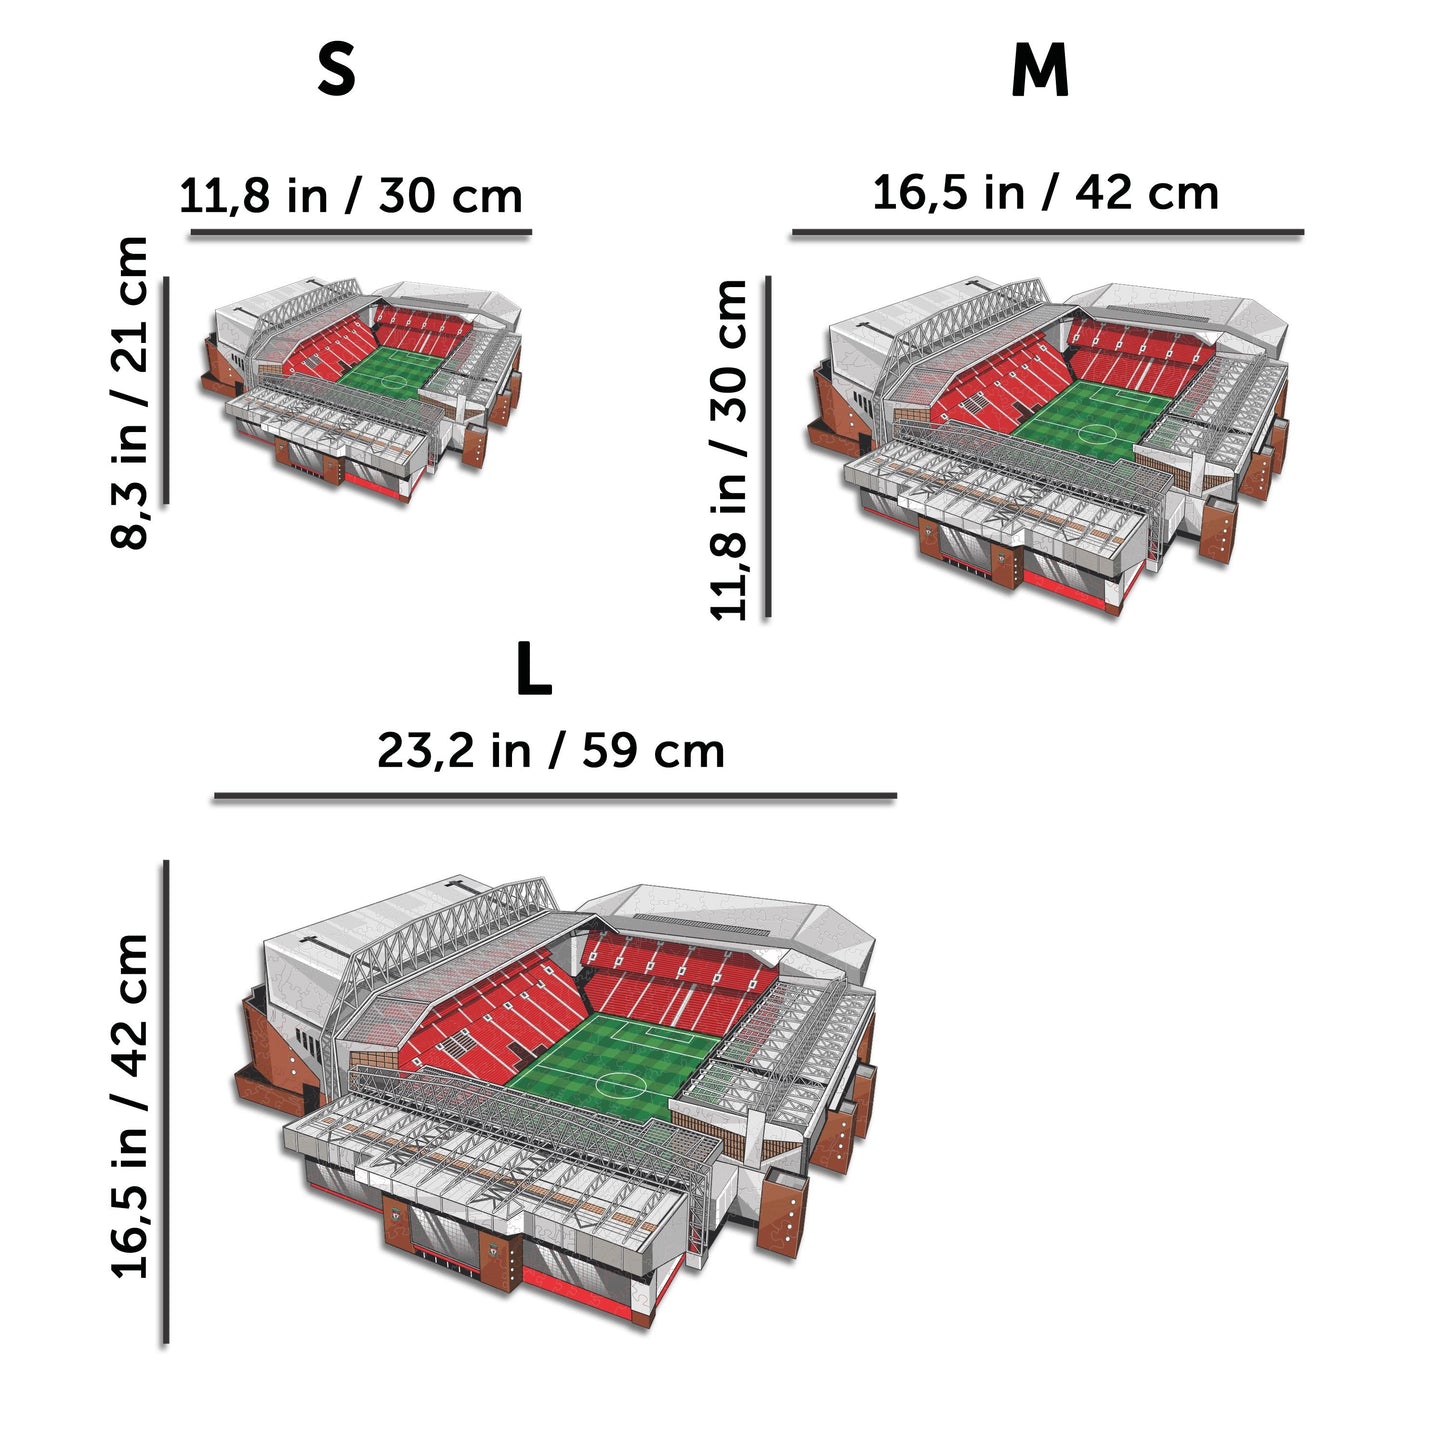 2 PACK Liverpool FC® Crest + Anfield Stadium